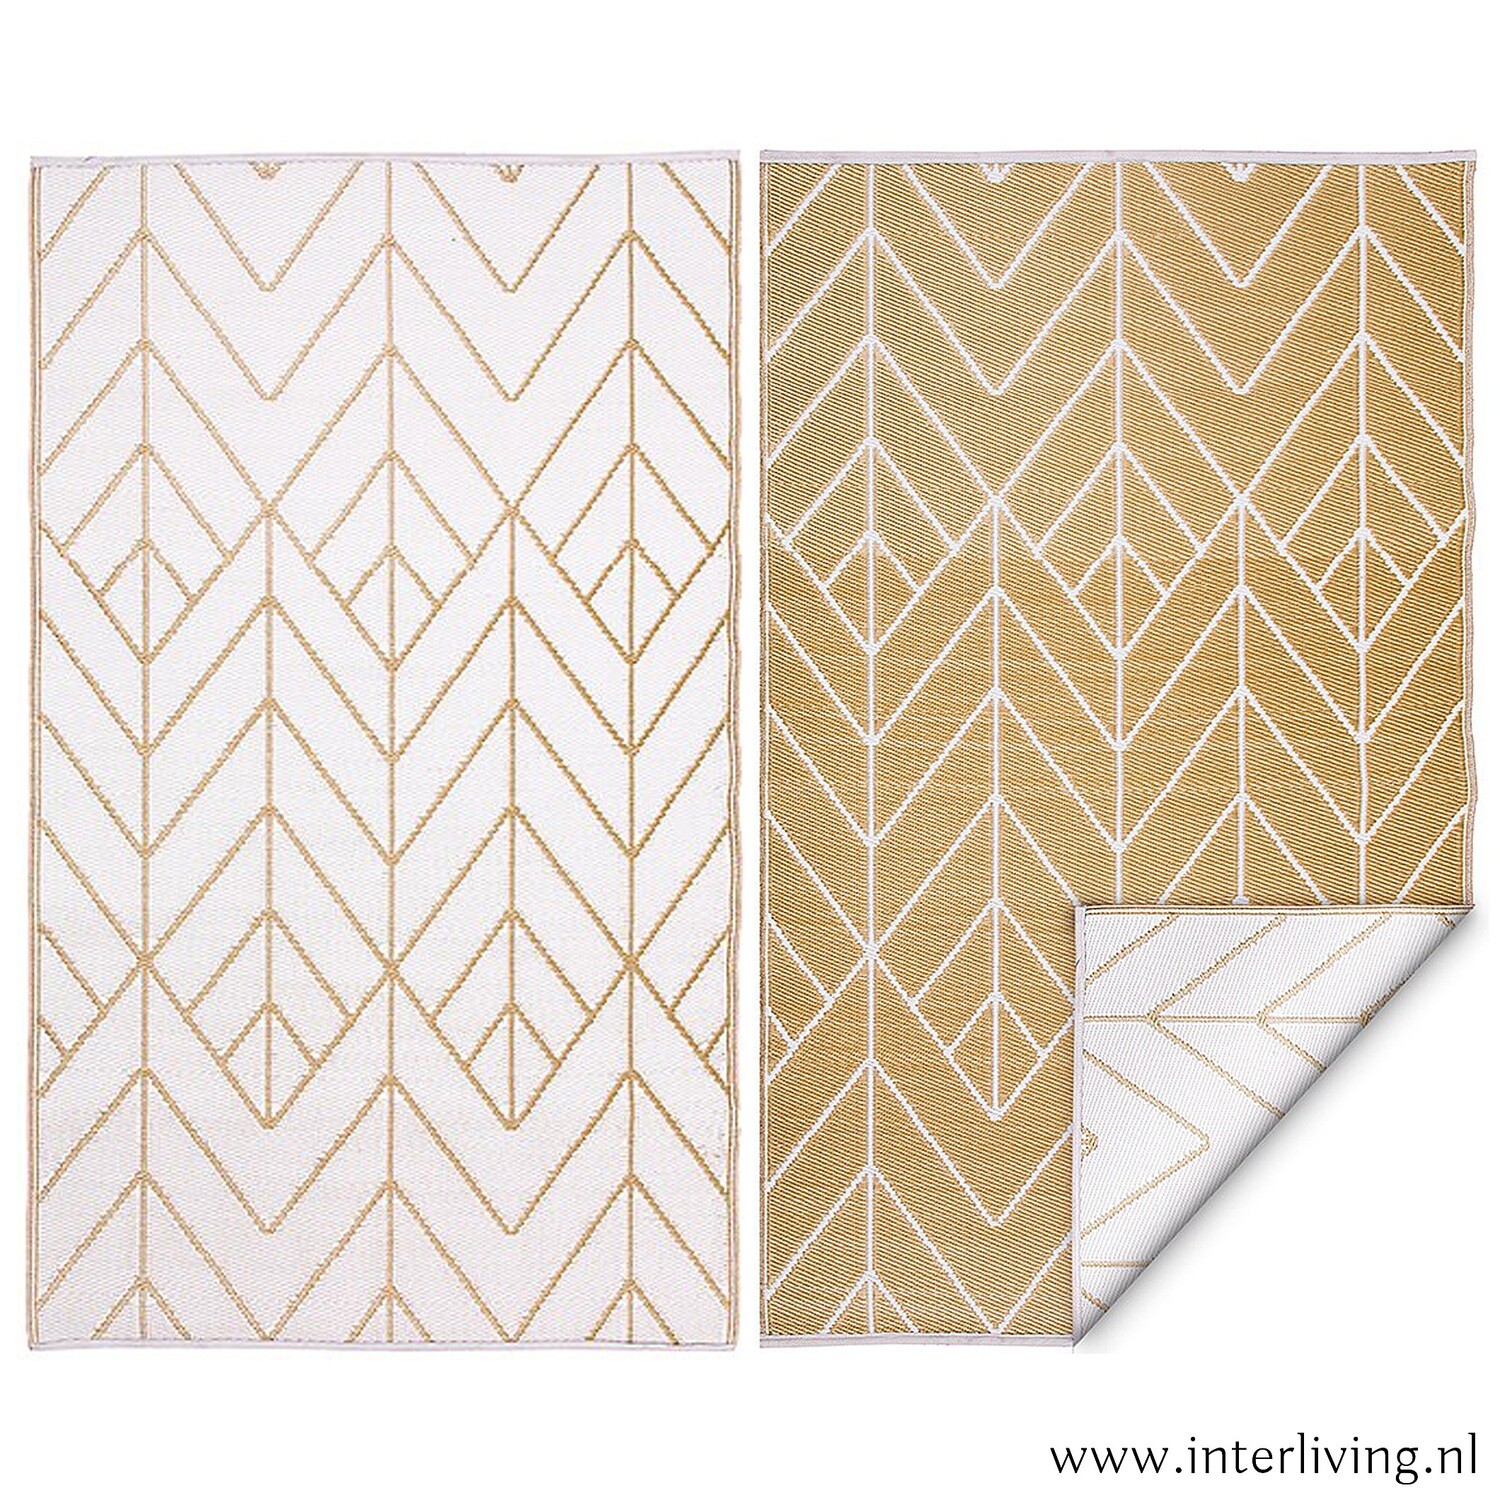 binnen & buiten vloerkleed in crème wit - goud tinten met ruit patroon -  oosterse visgraat patroon (eco recycled plastic) omkeerbaar / tweezijdig